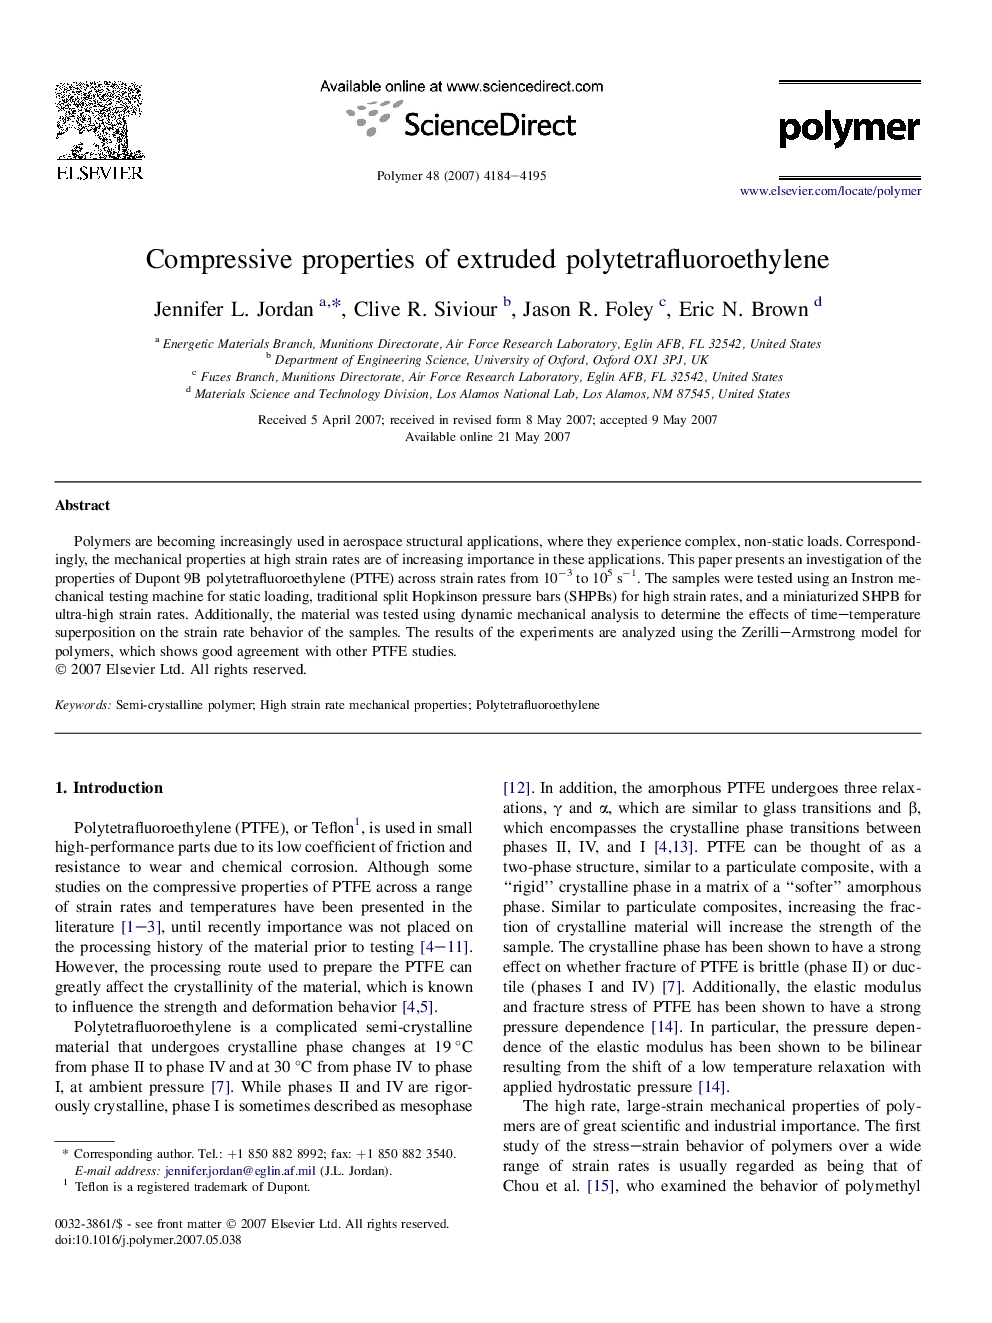 Compressive properties of extruded polytetrafluoroethylene